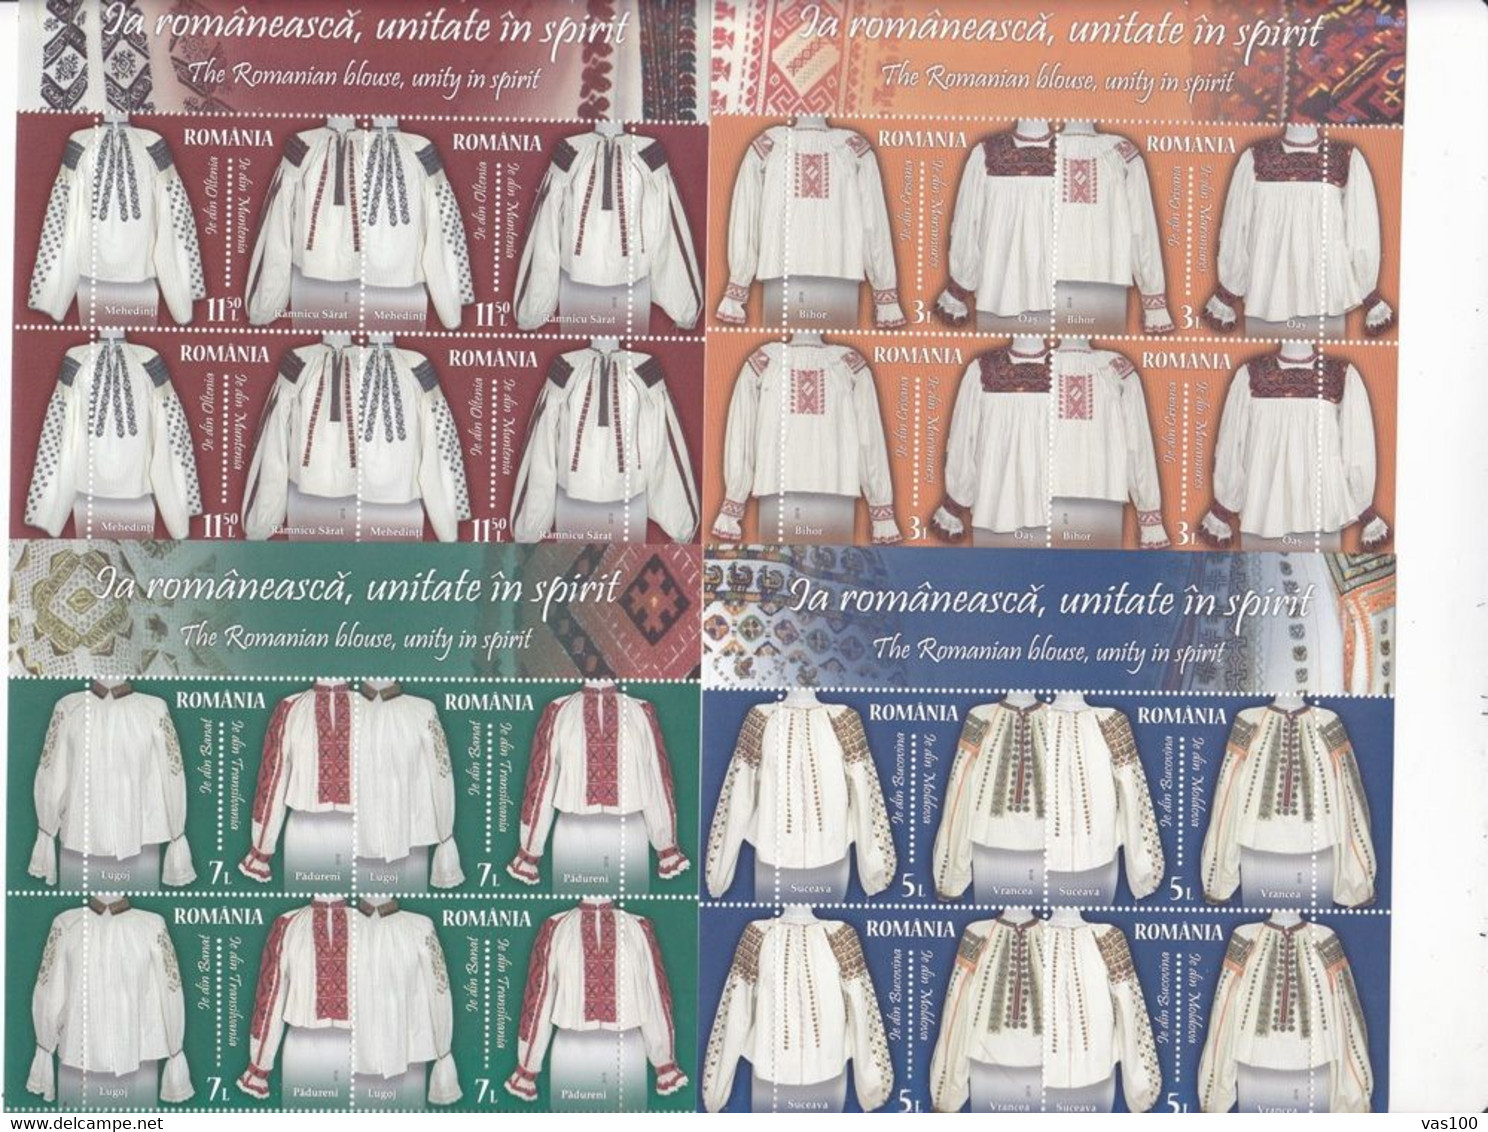 Romania 2018 NATIONAL COSTUME,FOLK WEDING CLOTHING, 4v (Sheets Of 4 Stamps + Label - Sheetlets) MNH - Feuilles Complètes Et Multiples